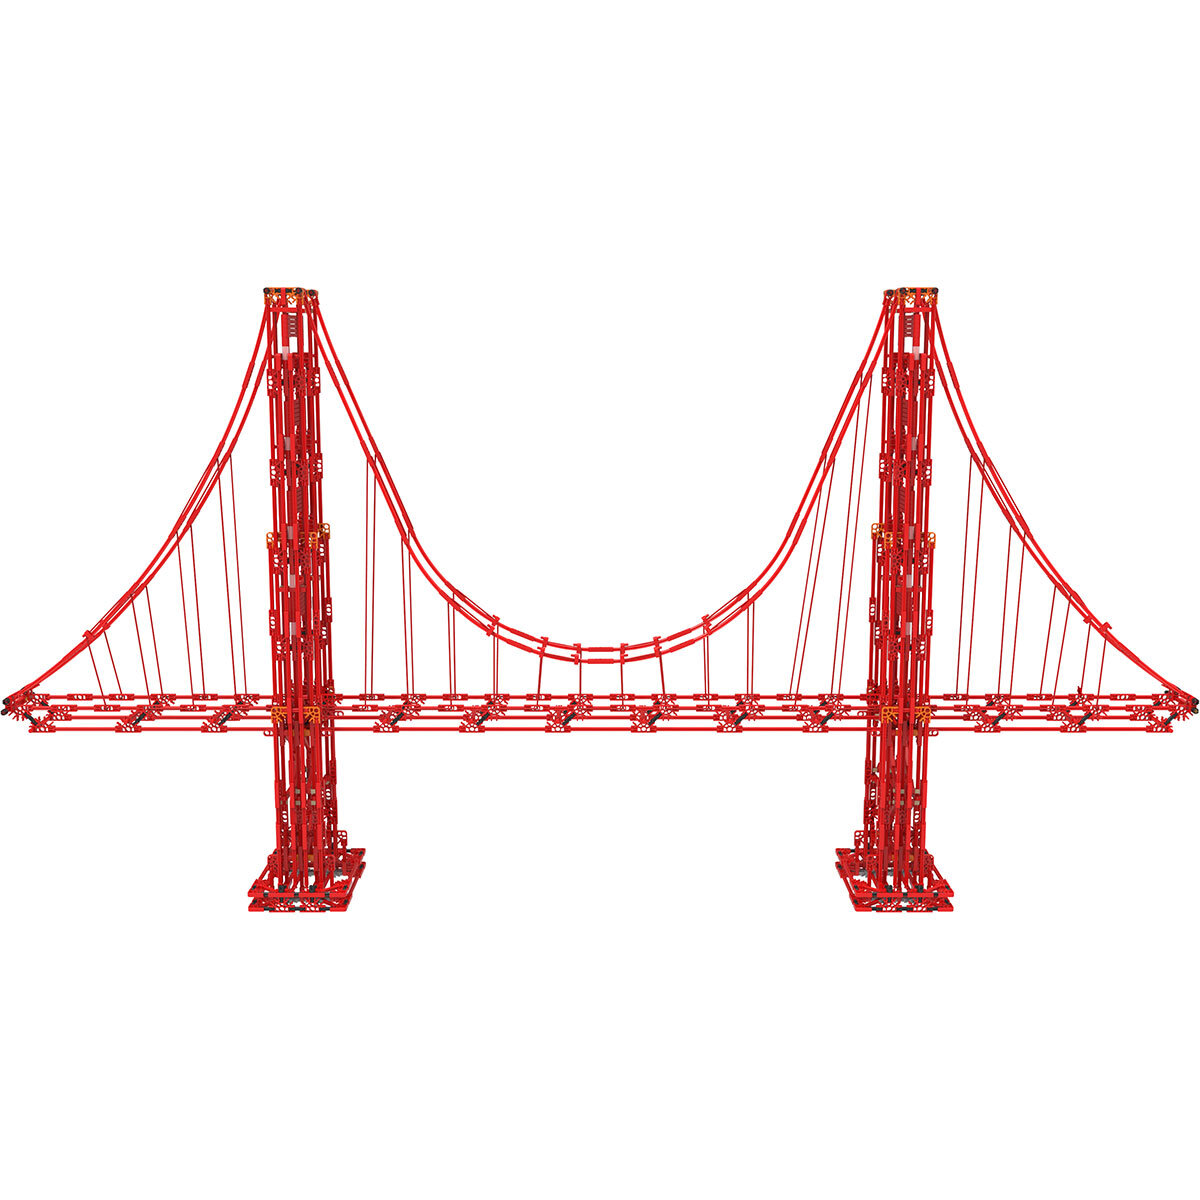 Buy K'nex Golden Gate Bridge Overview Image at Costco.co.uk